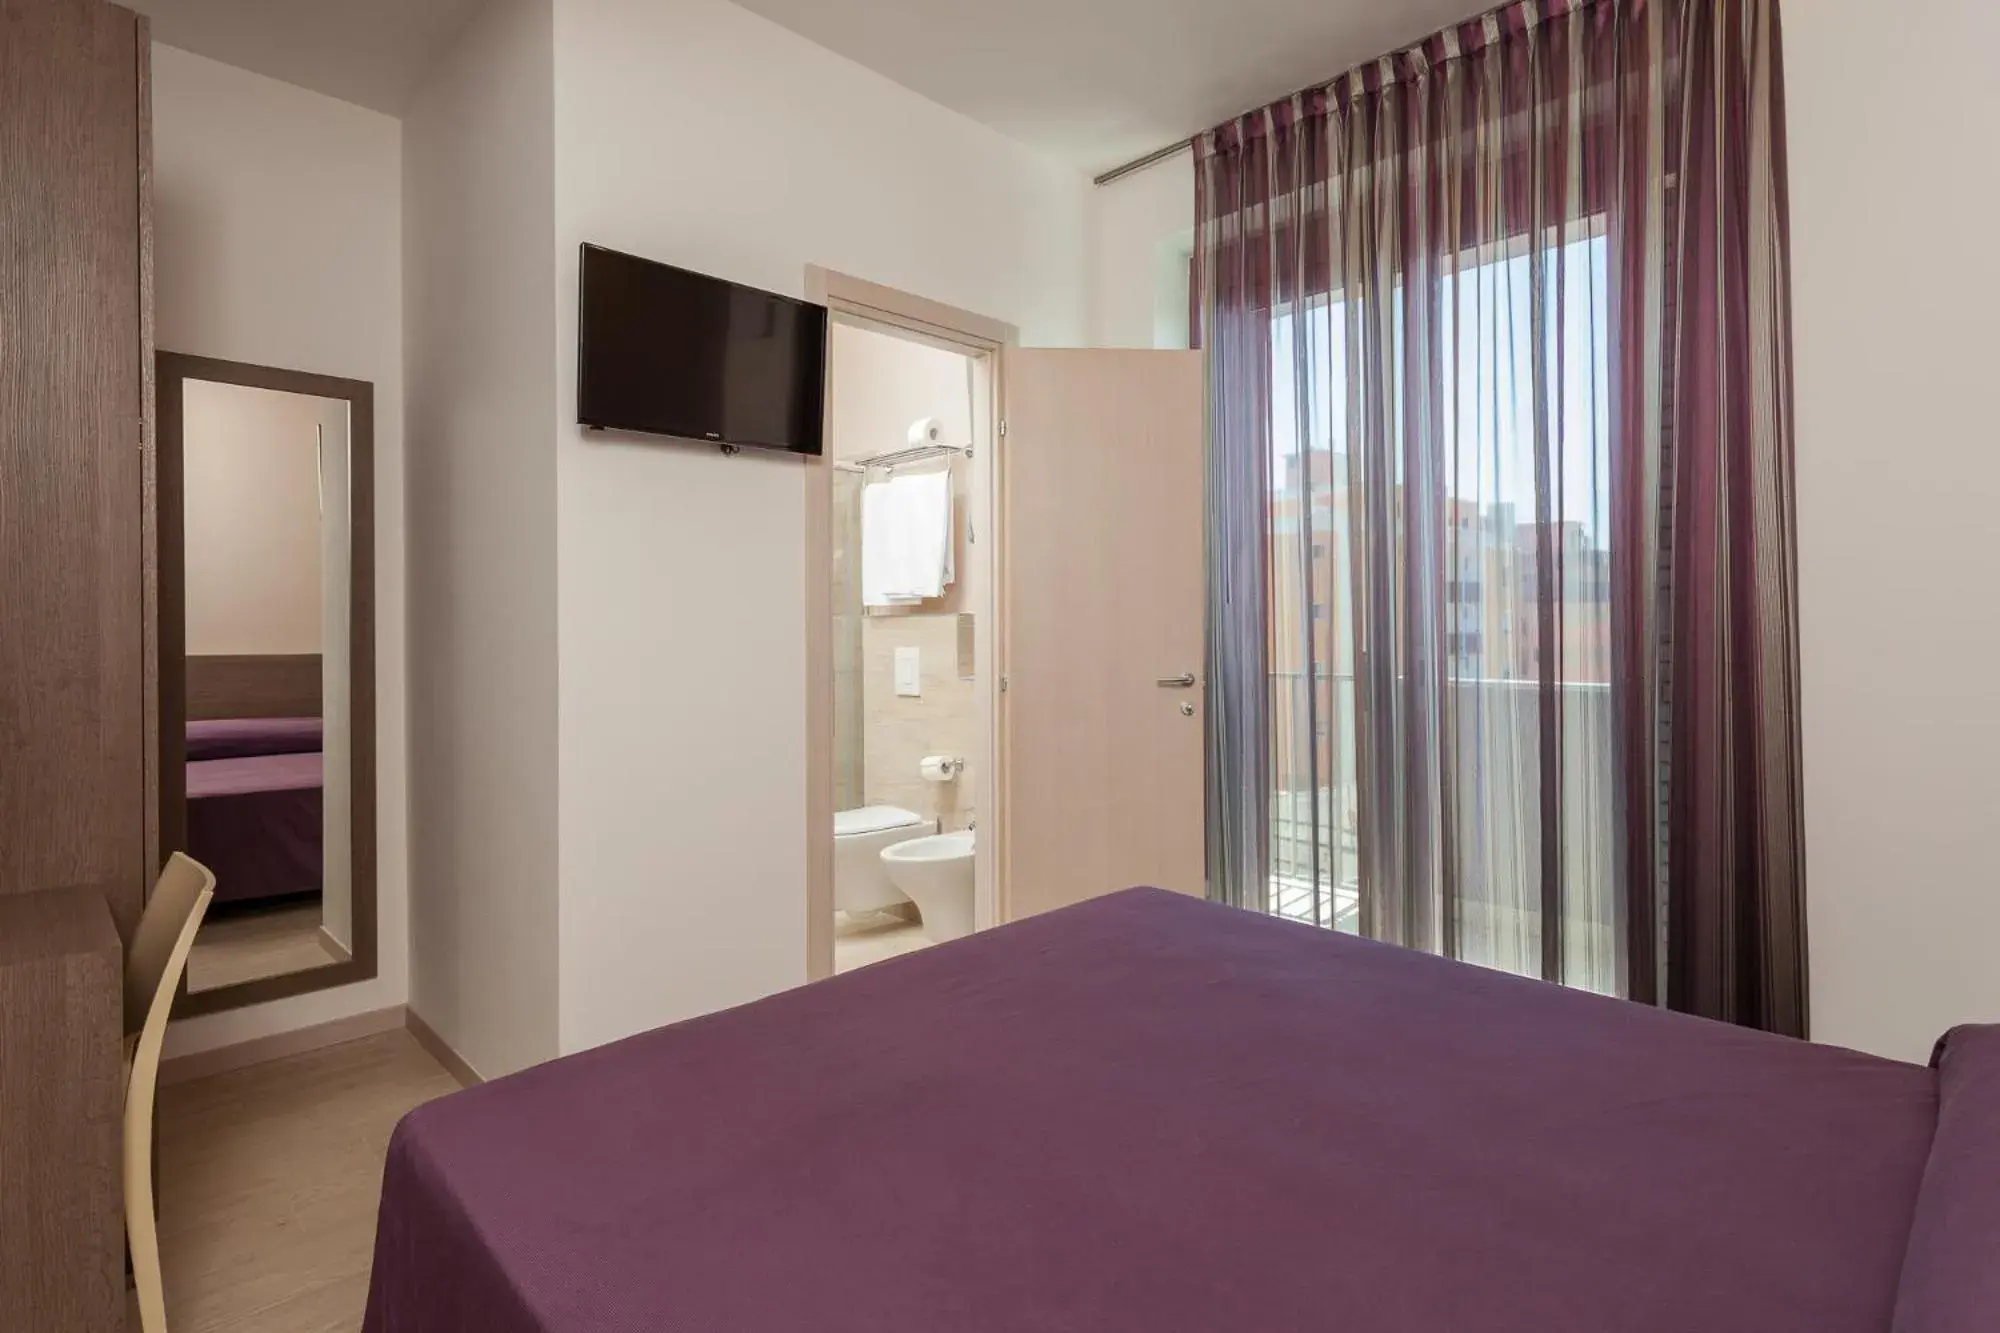 Day, Room Photo in Hotel Gioia